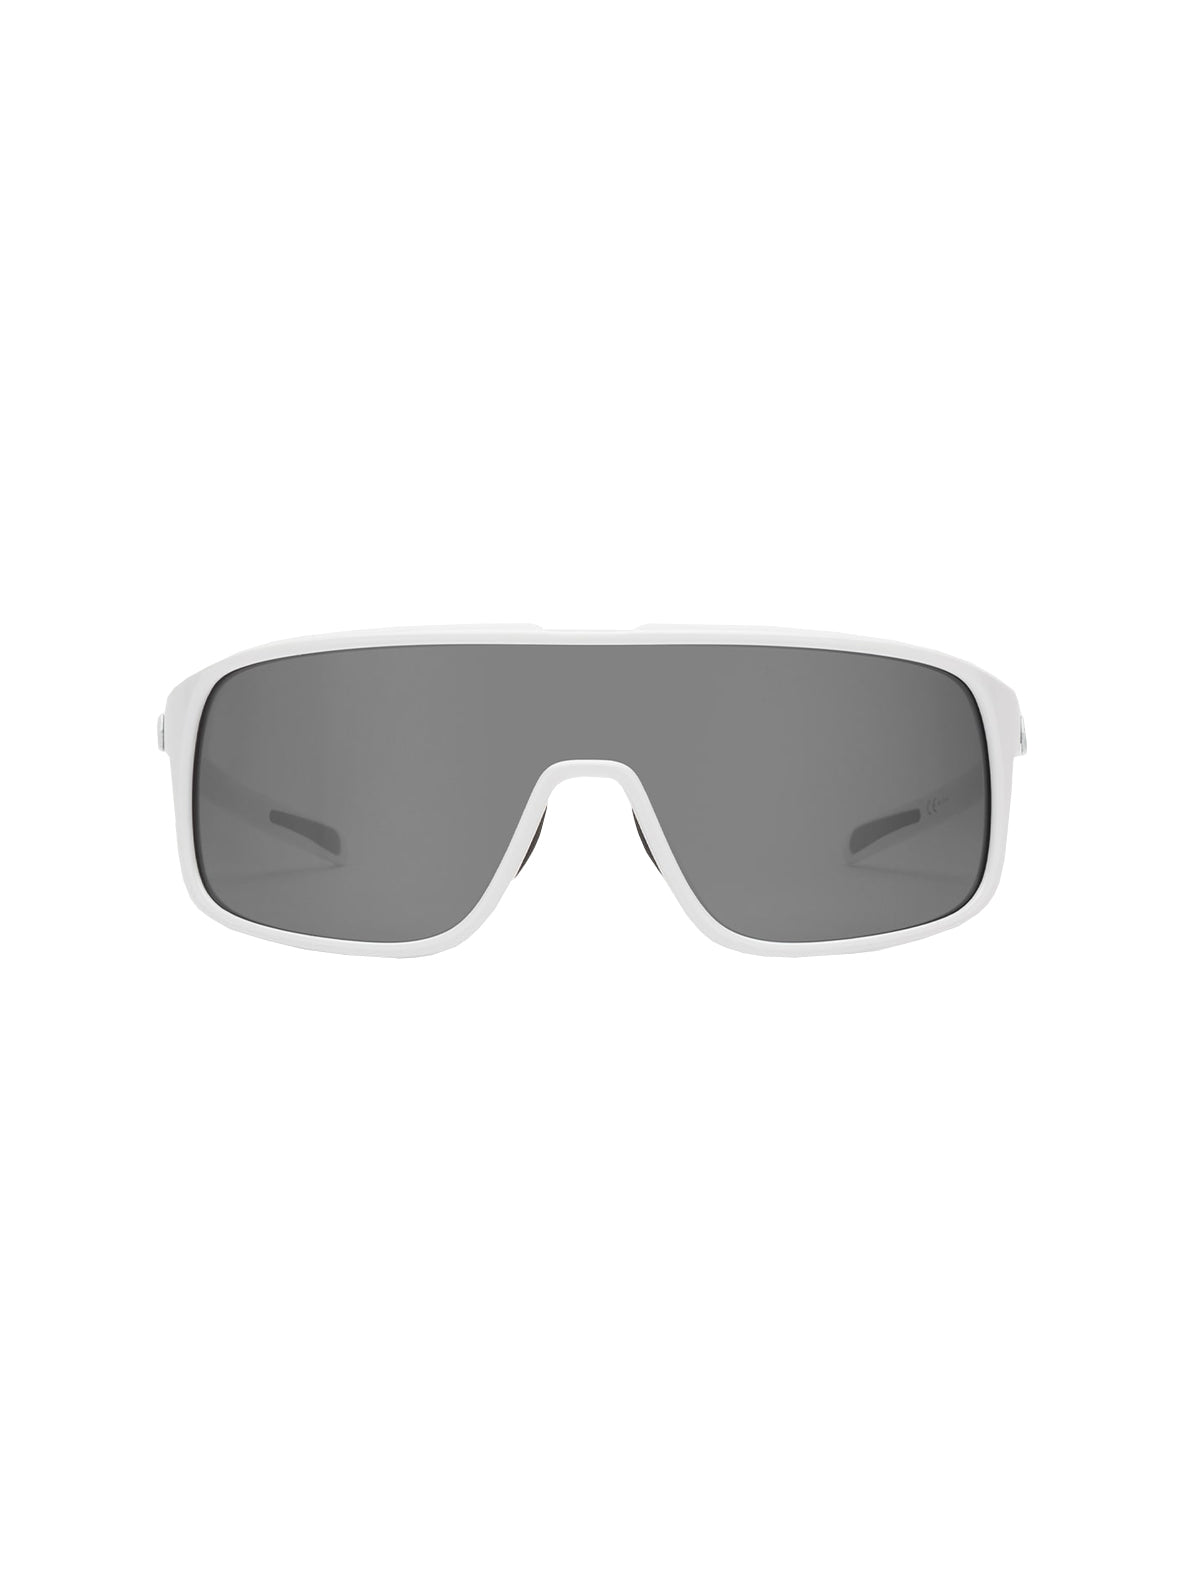 Volcom Macho Sunglasses GlossWhite SilverMirror